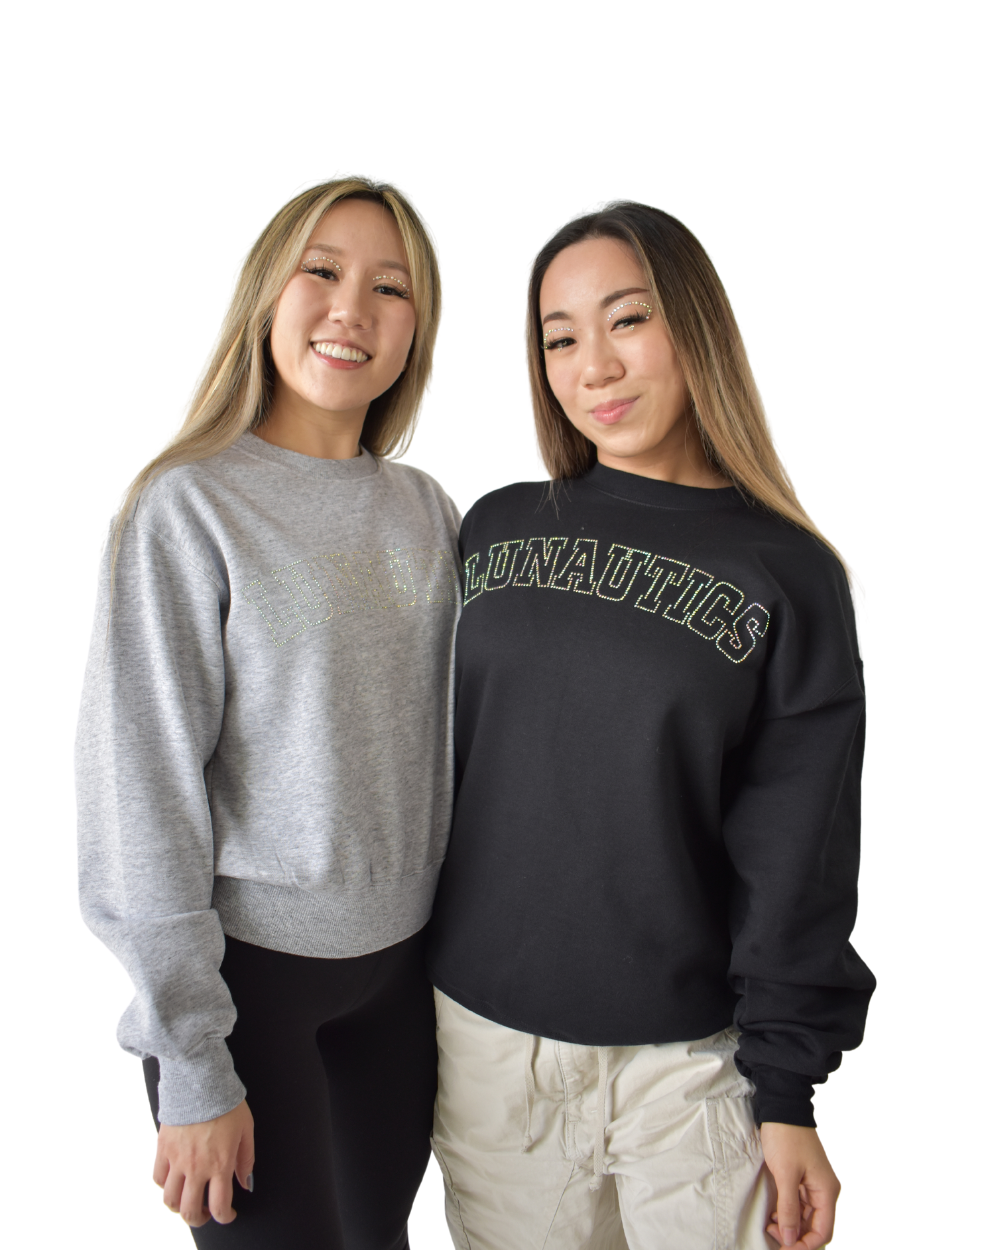 Collegiate Logo Butterfly Crewneck Sweatshirt - Lunautics Sweater